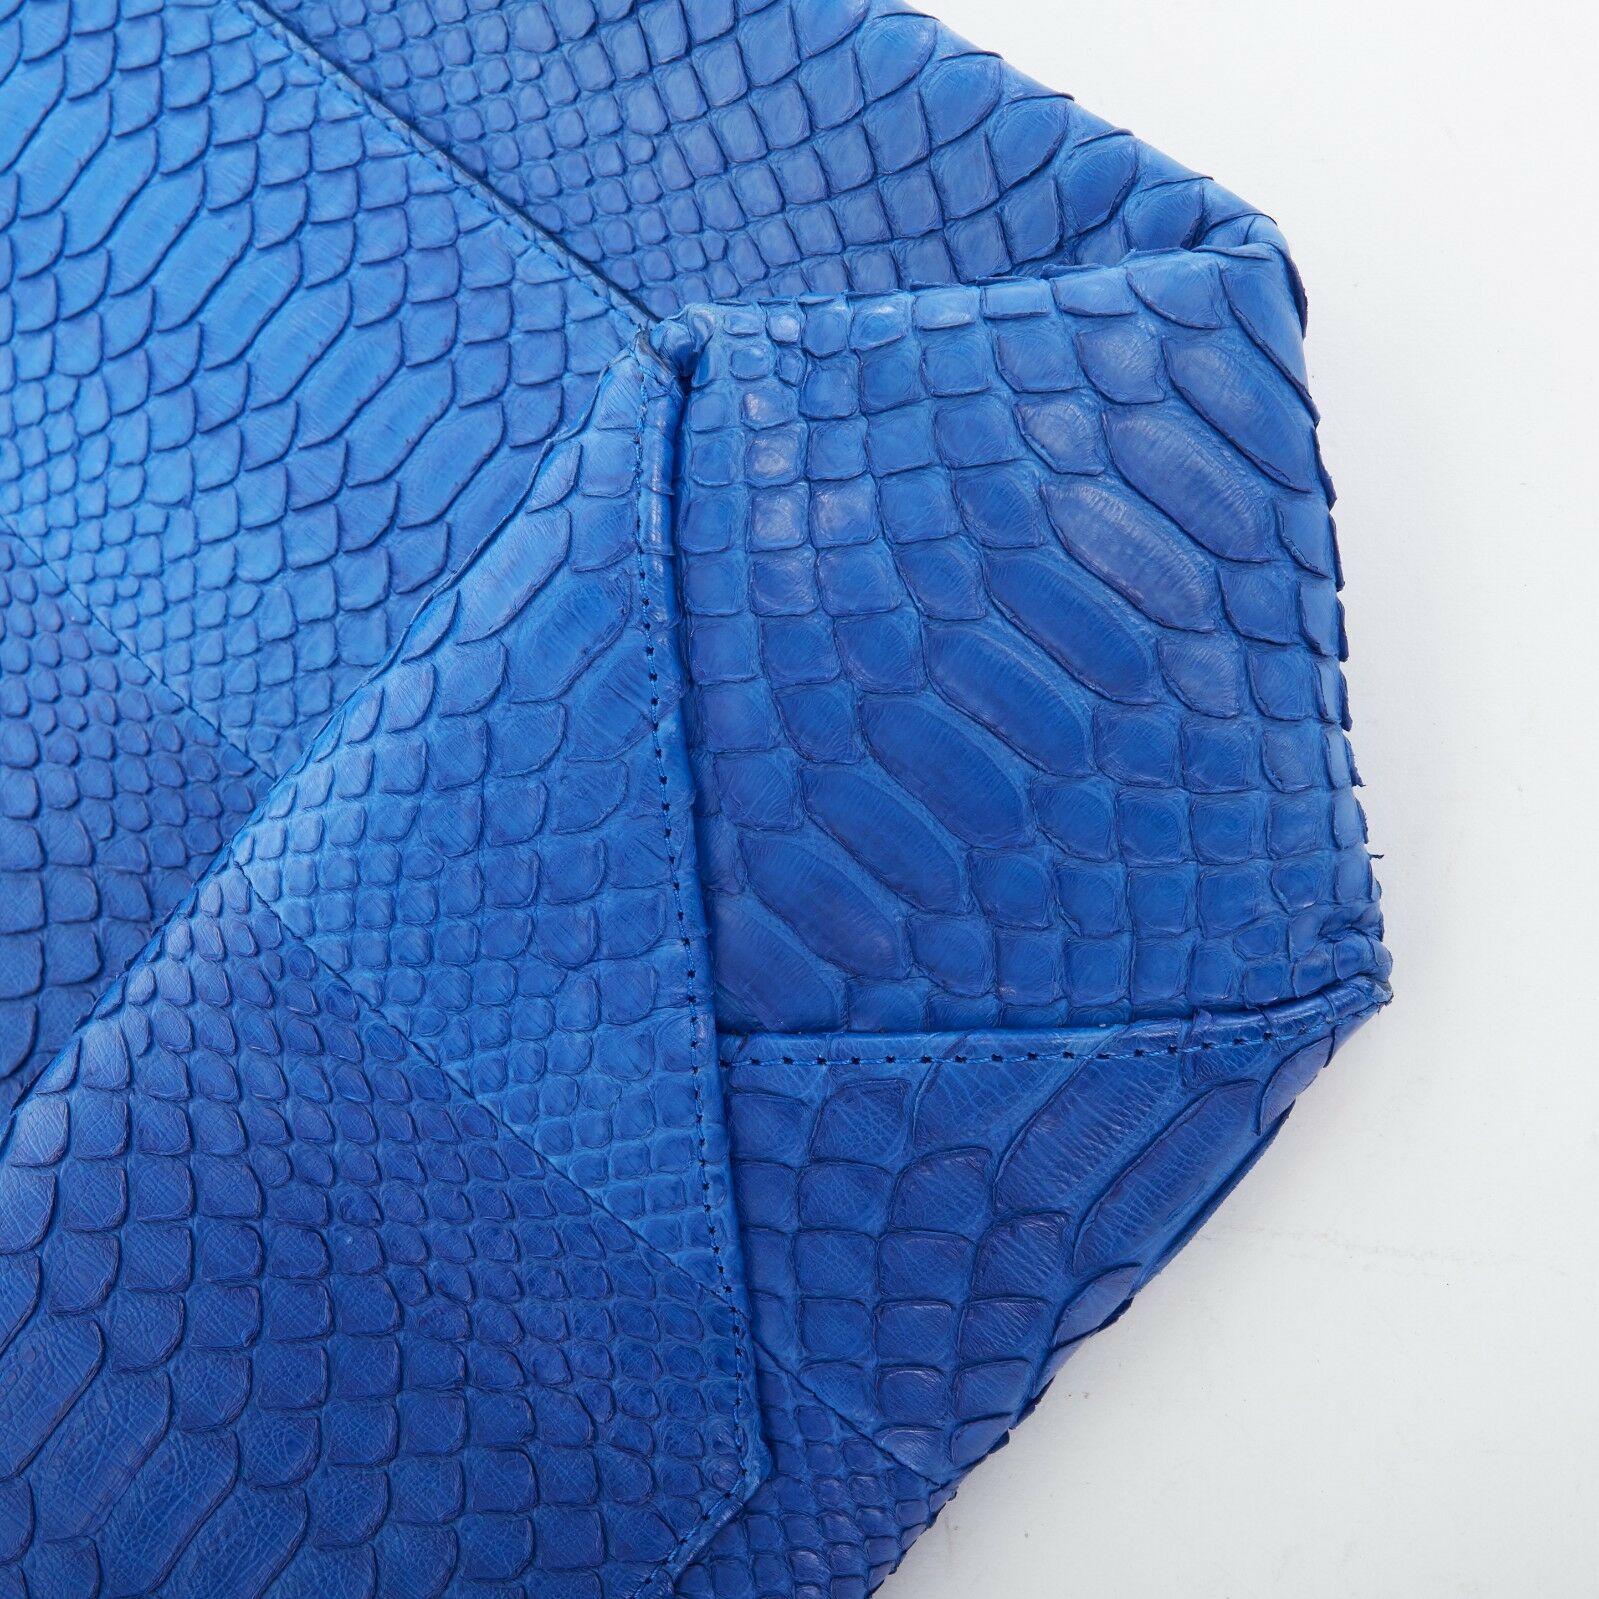 CELINE PHOEBE PHILO Cabas cobalt blue python leather verticle tote shopper bag 3